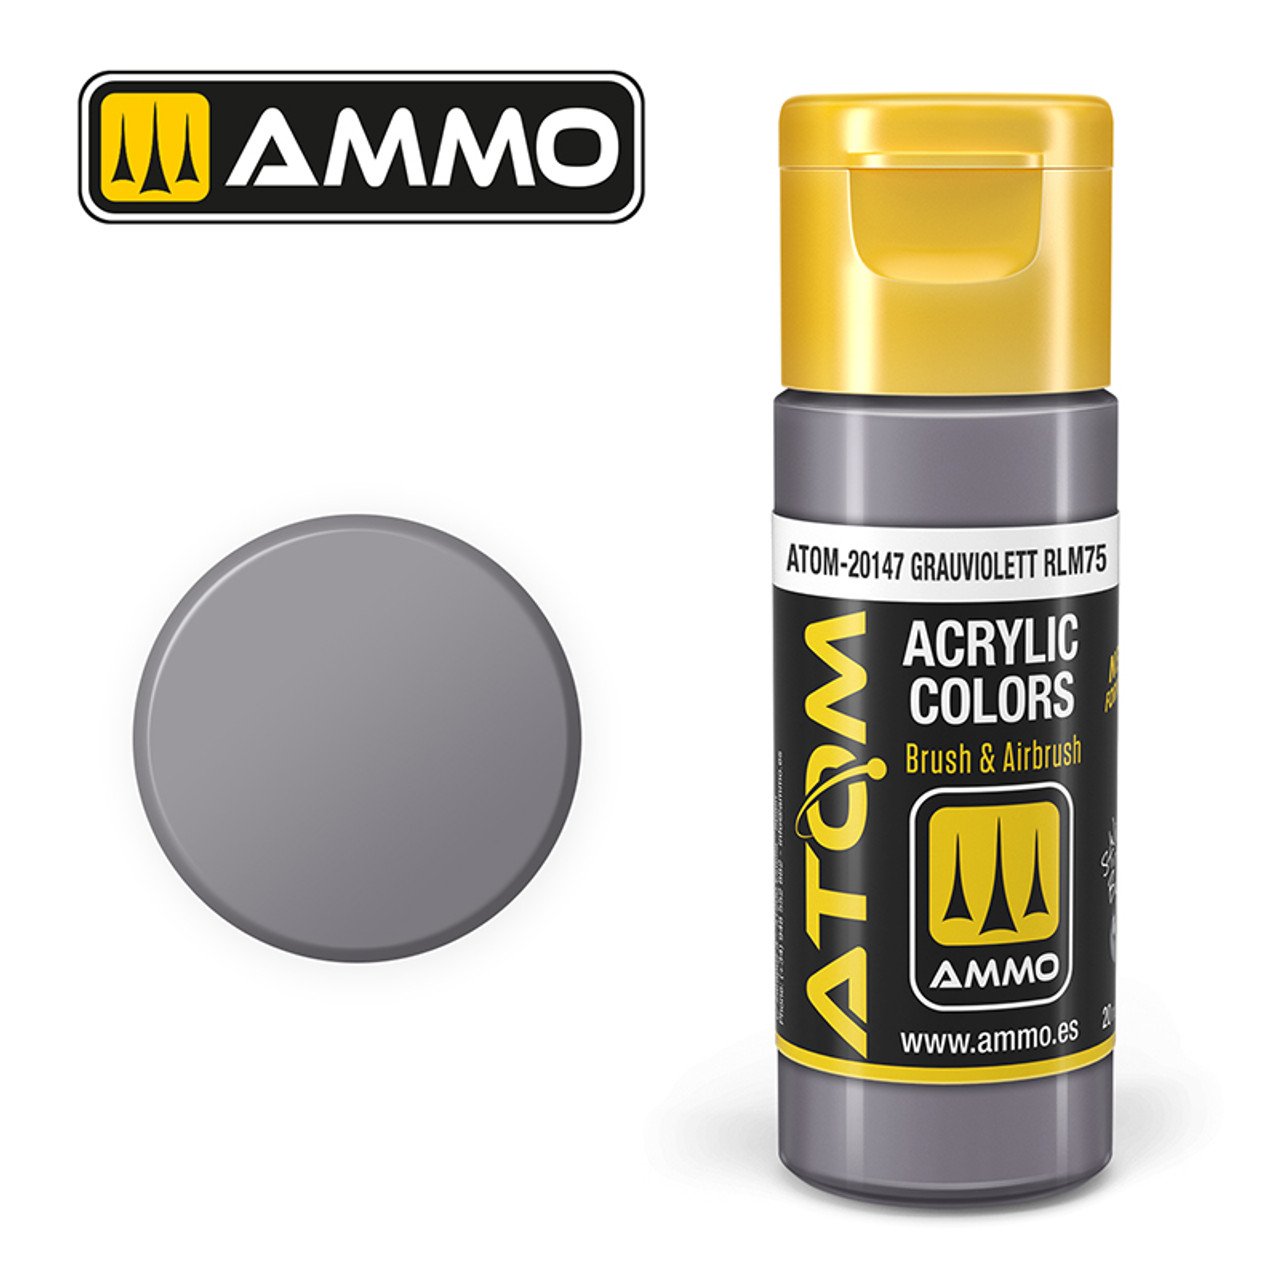 20147 ATOM Acrylic Paint - Grauviolett RLM75 (20ml)